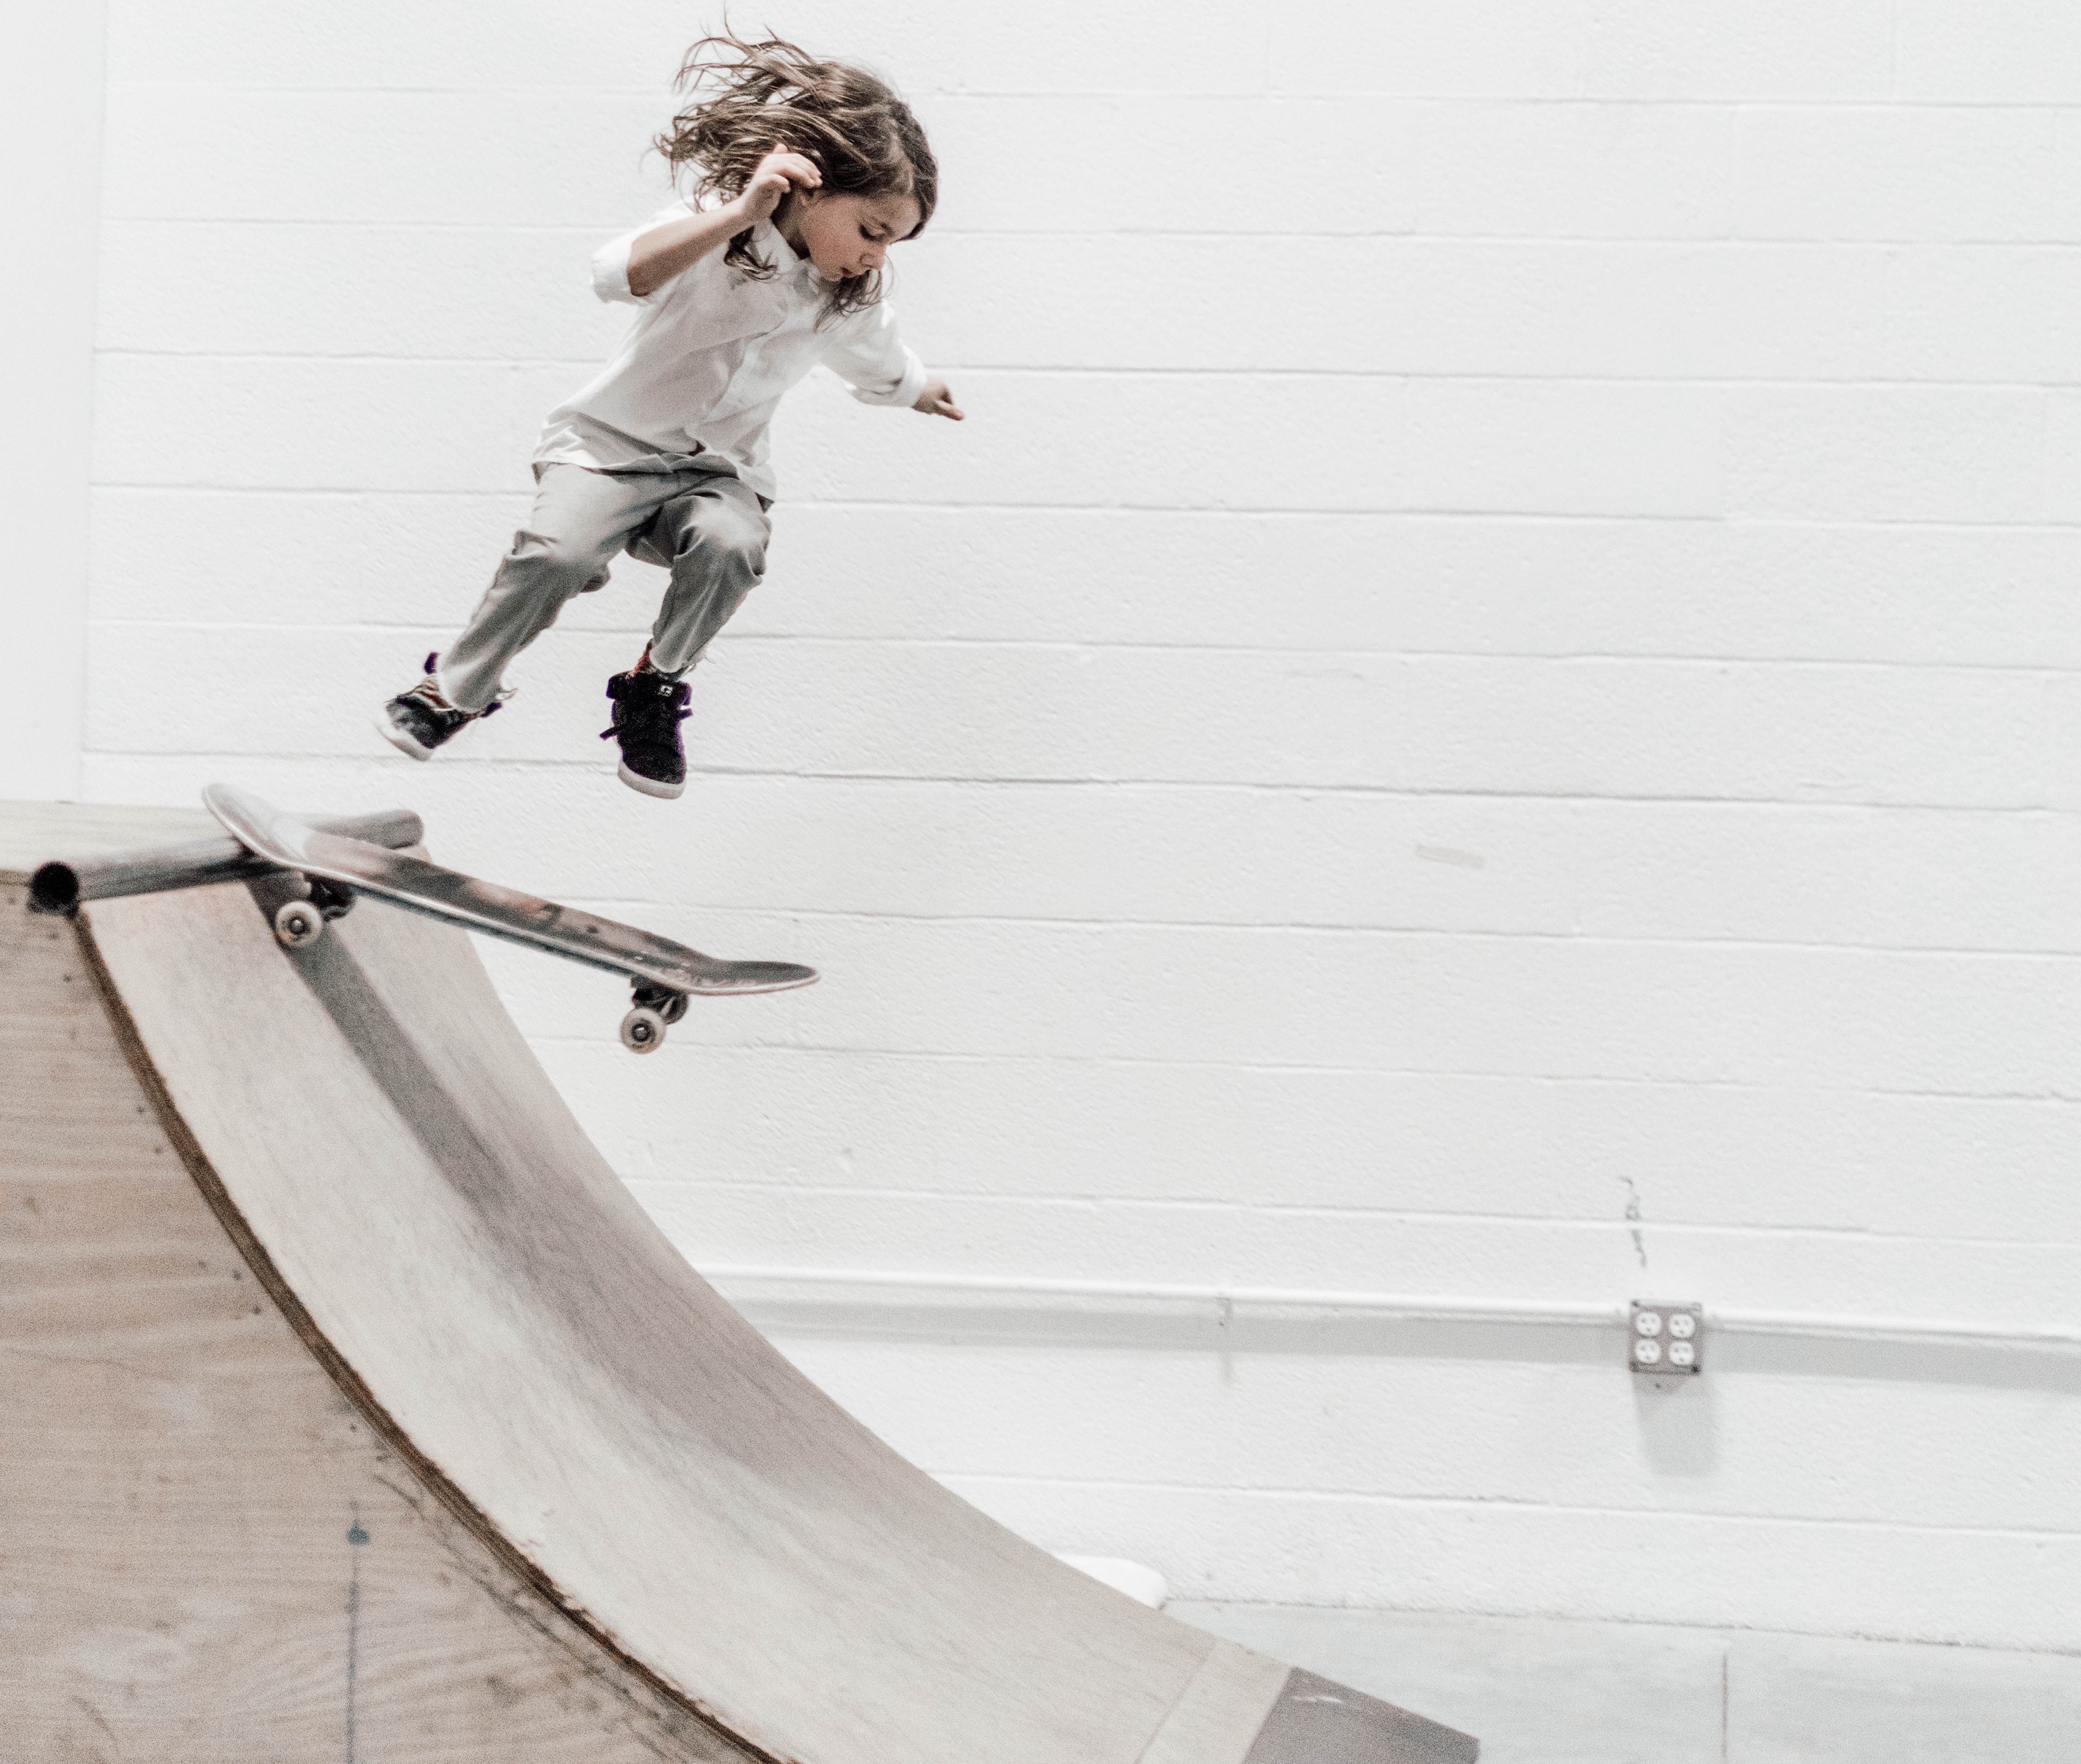 Child skateboarding down a ramp